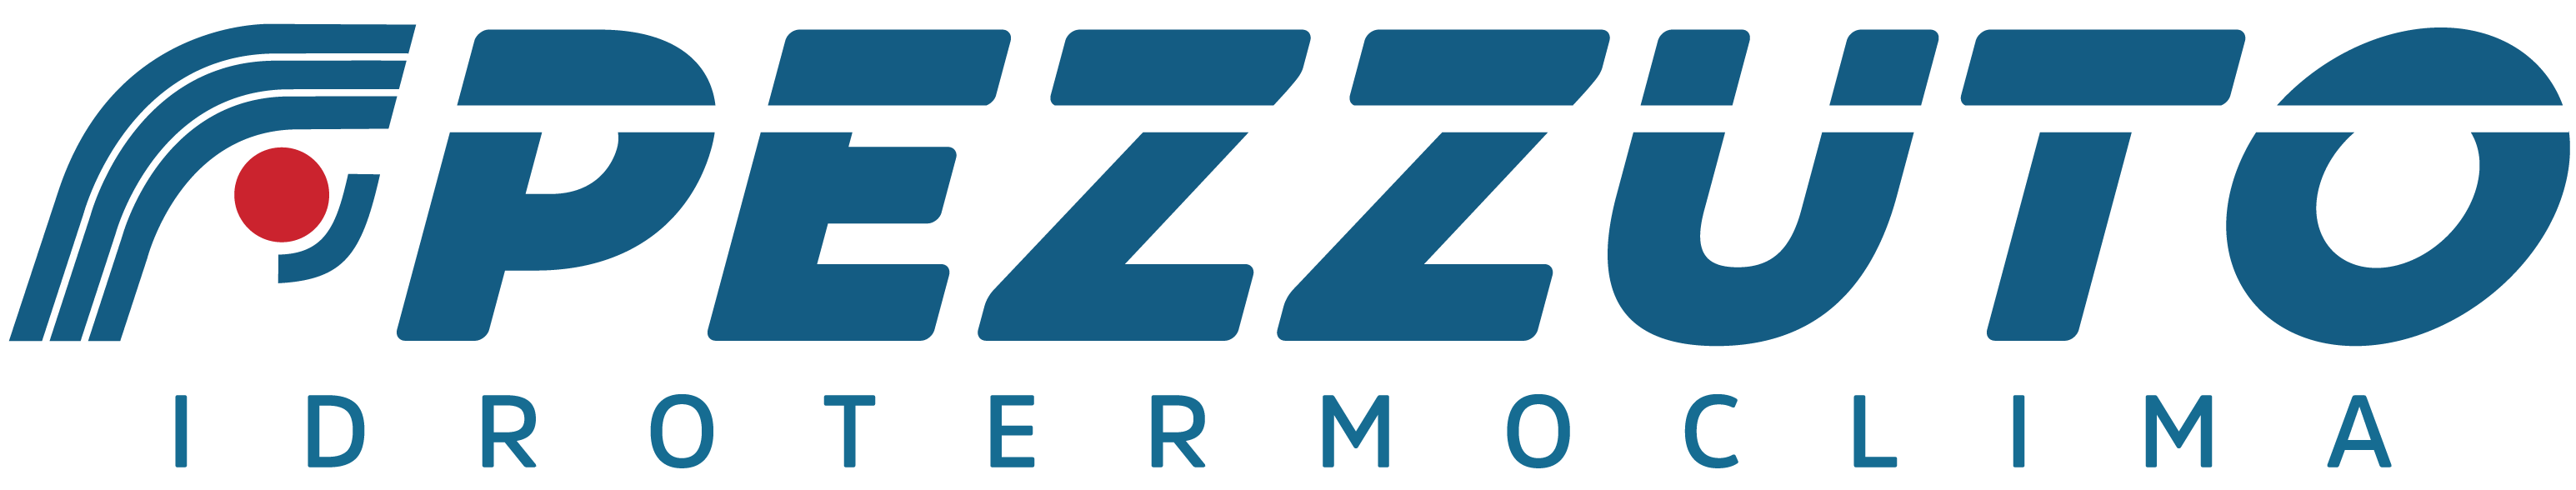 Logo Pezzuto Idrotermoclima-01